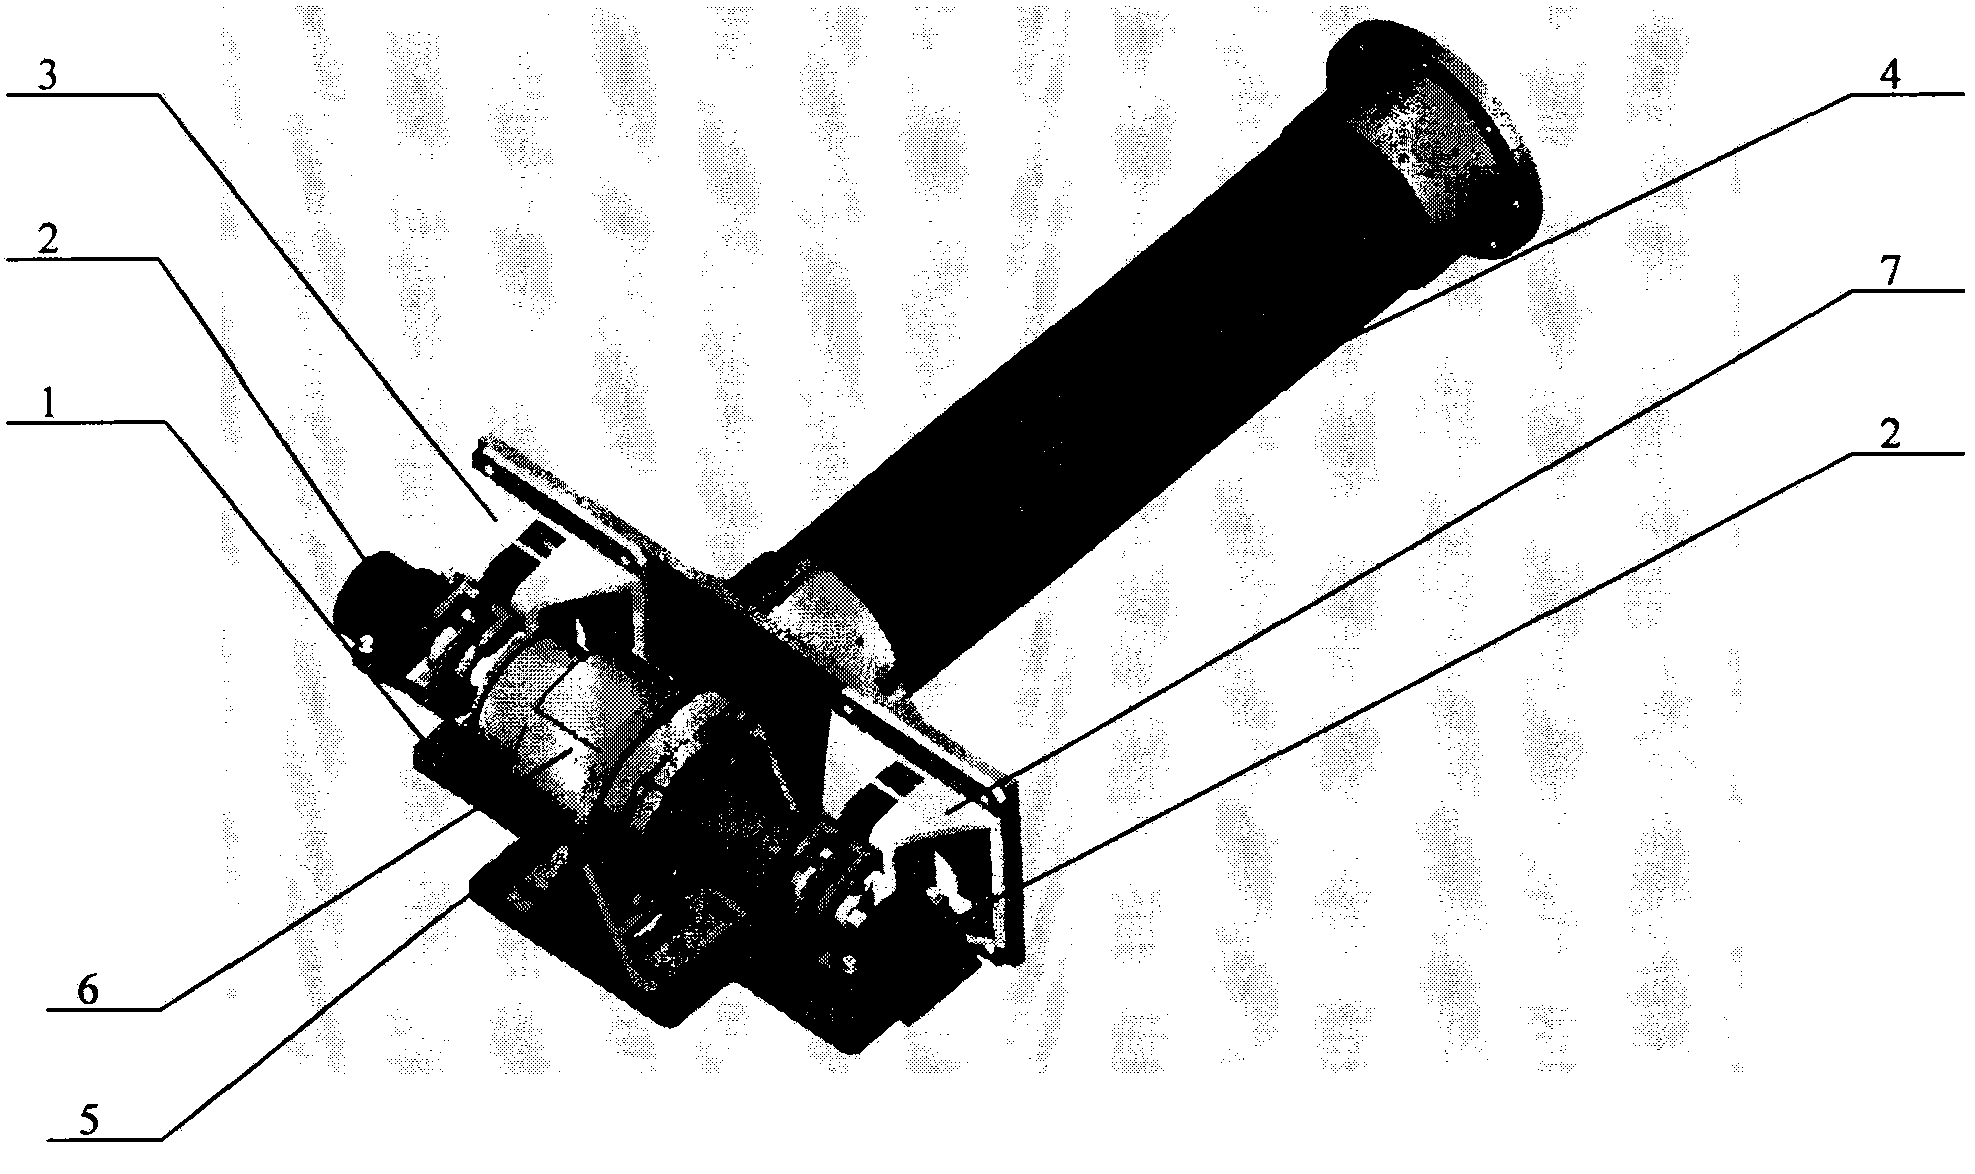 A spacecraft deployment mechanism